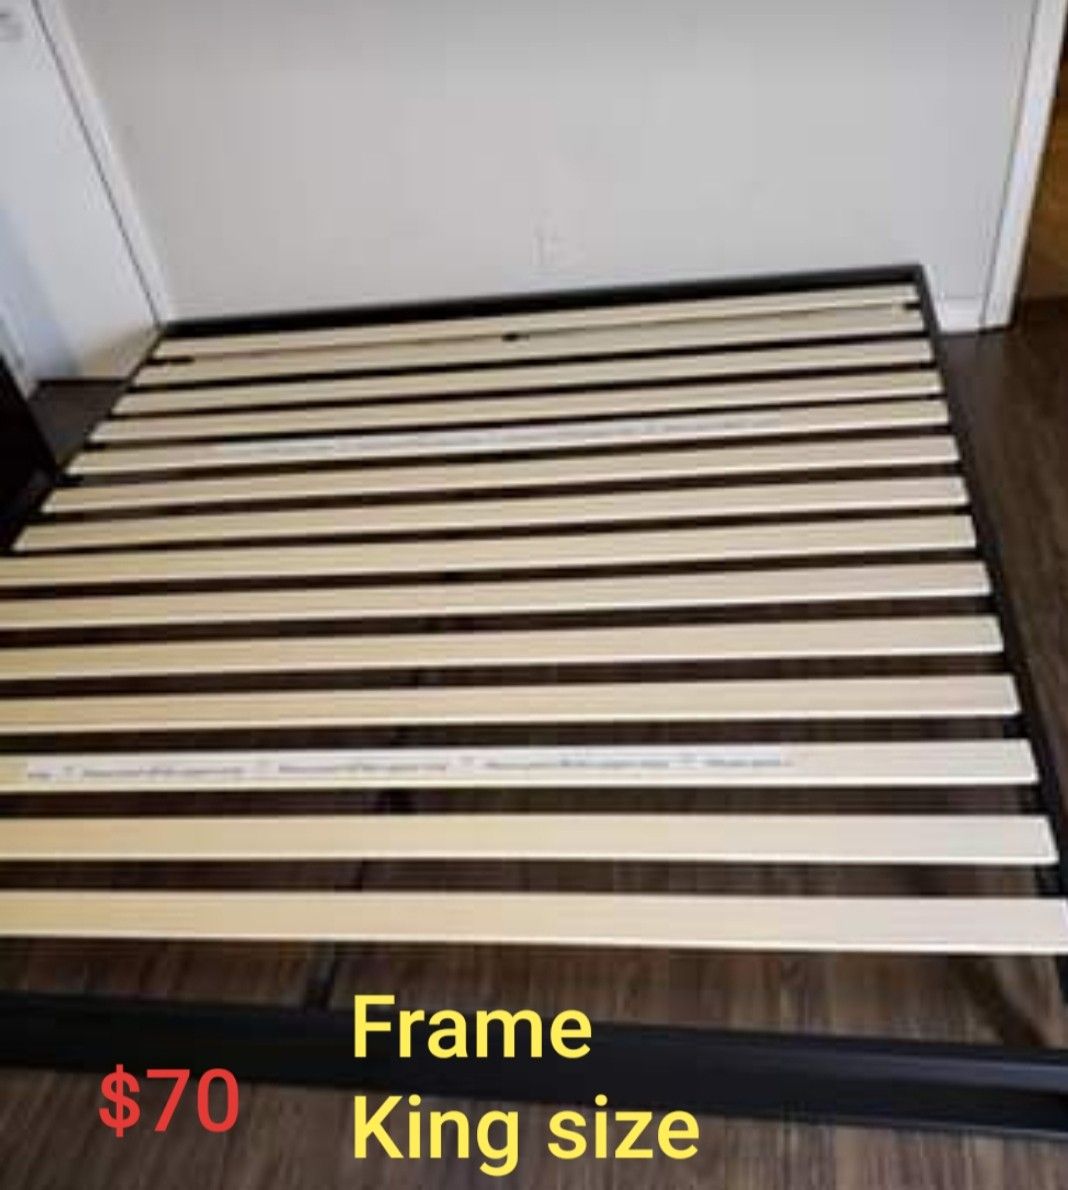 Platform bed frame king size. Brand new. Free delivery. $70